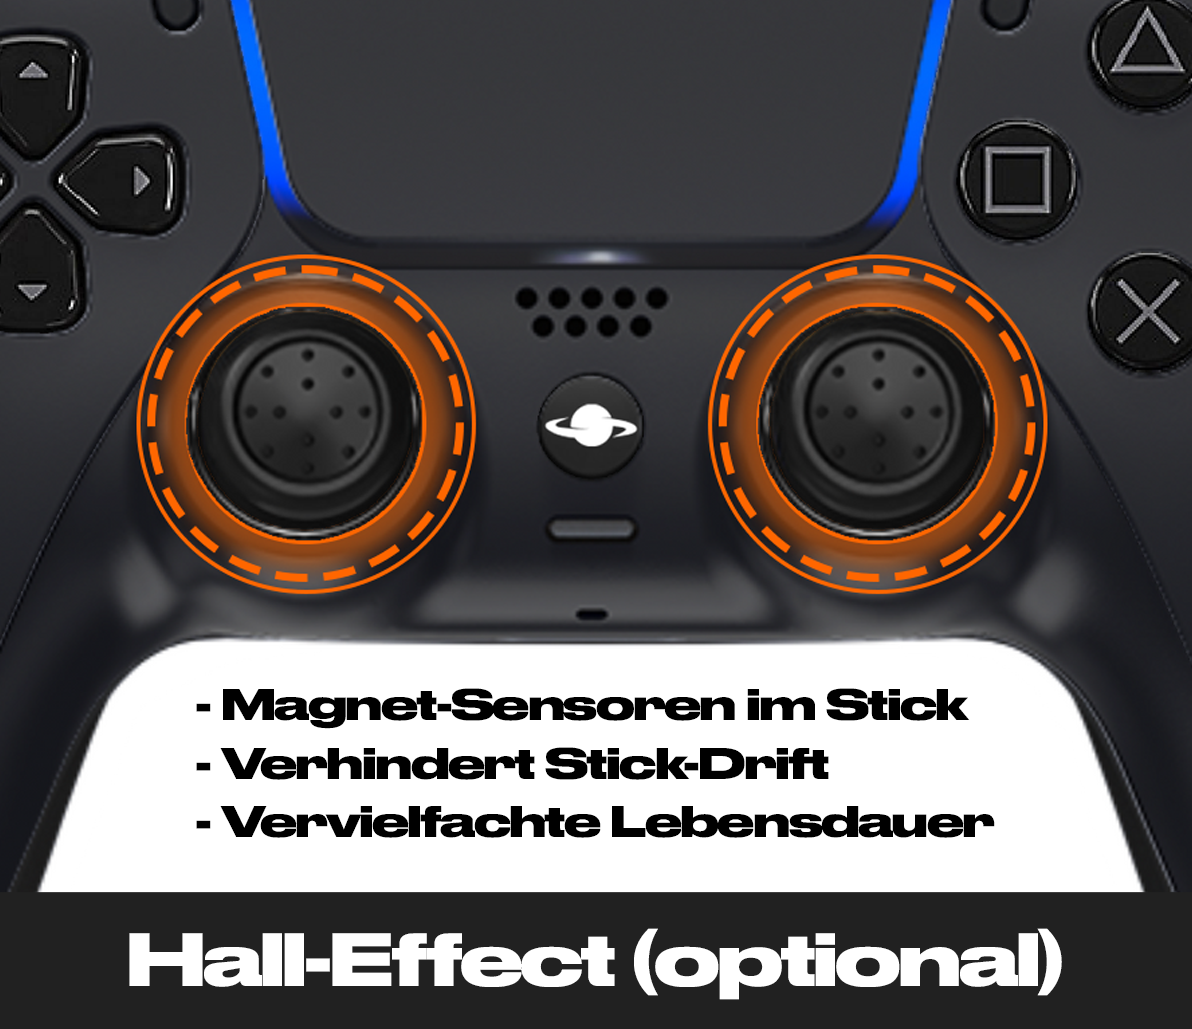 PS5 Custom Controller 'Orangener Mecha'